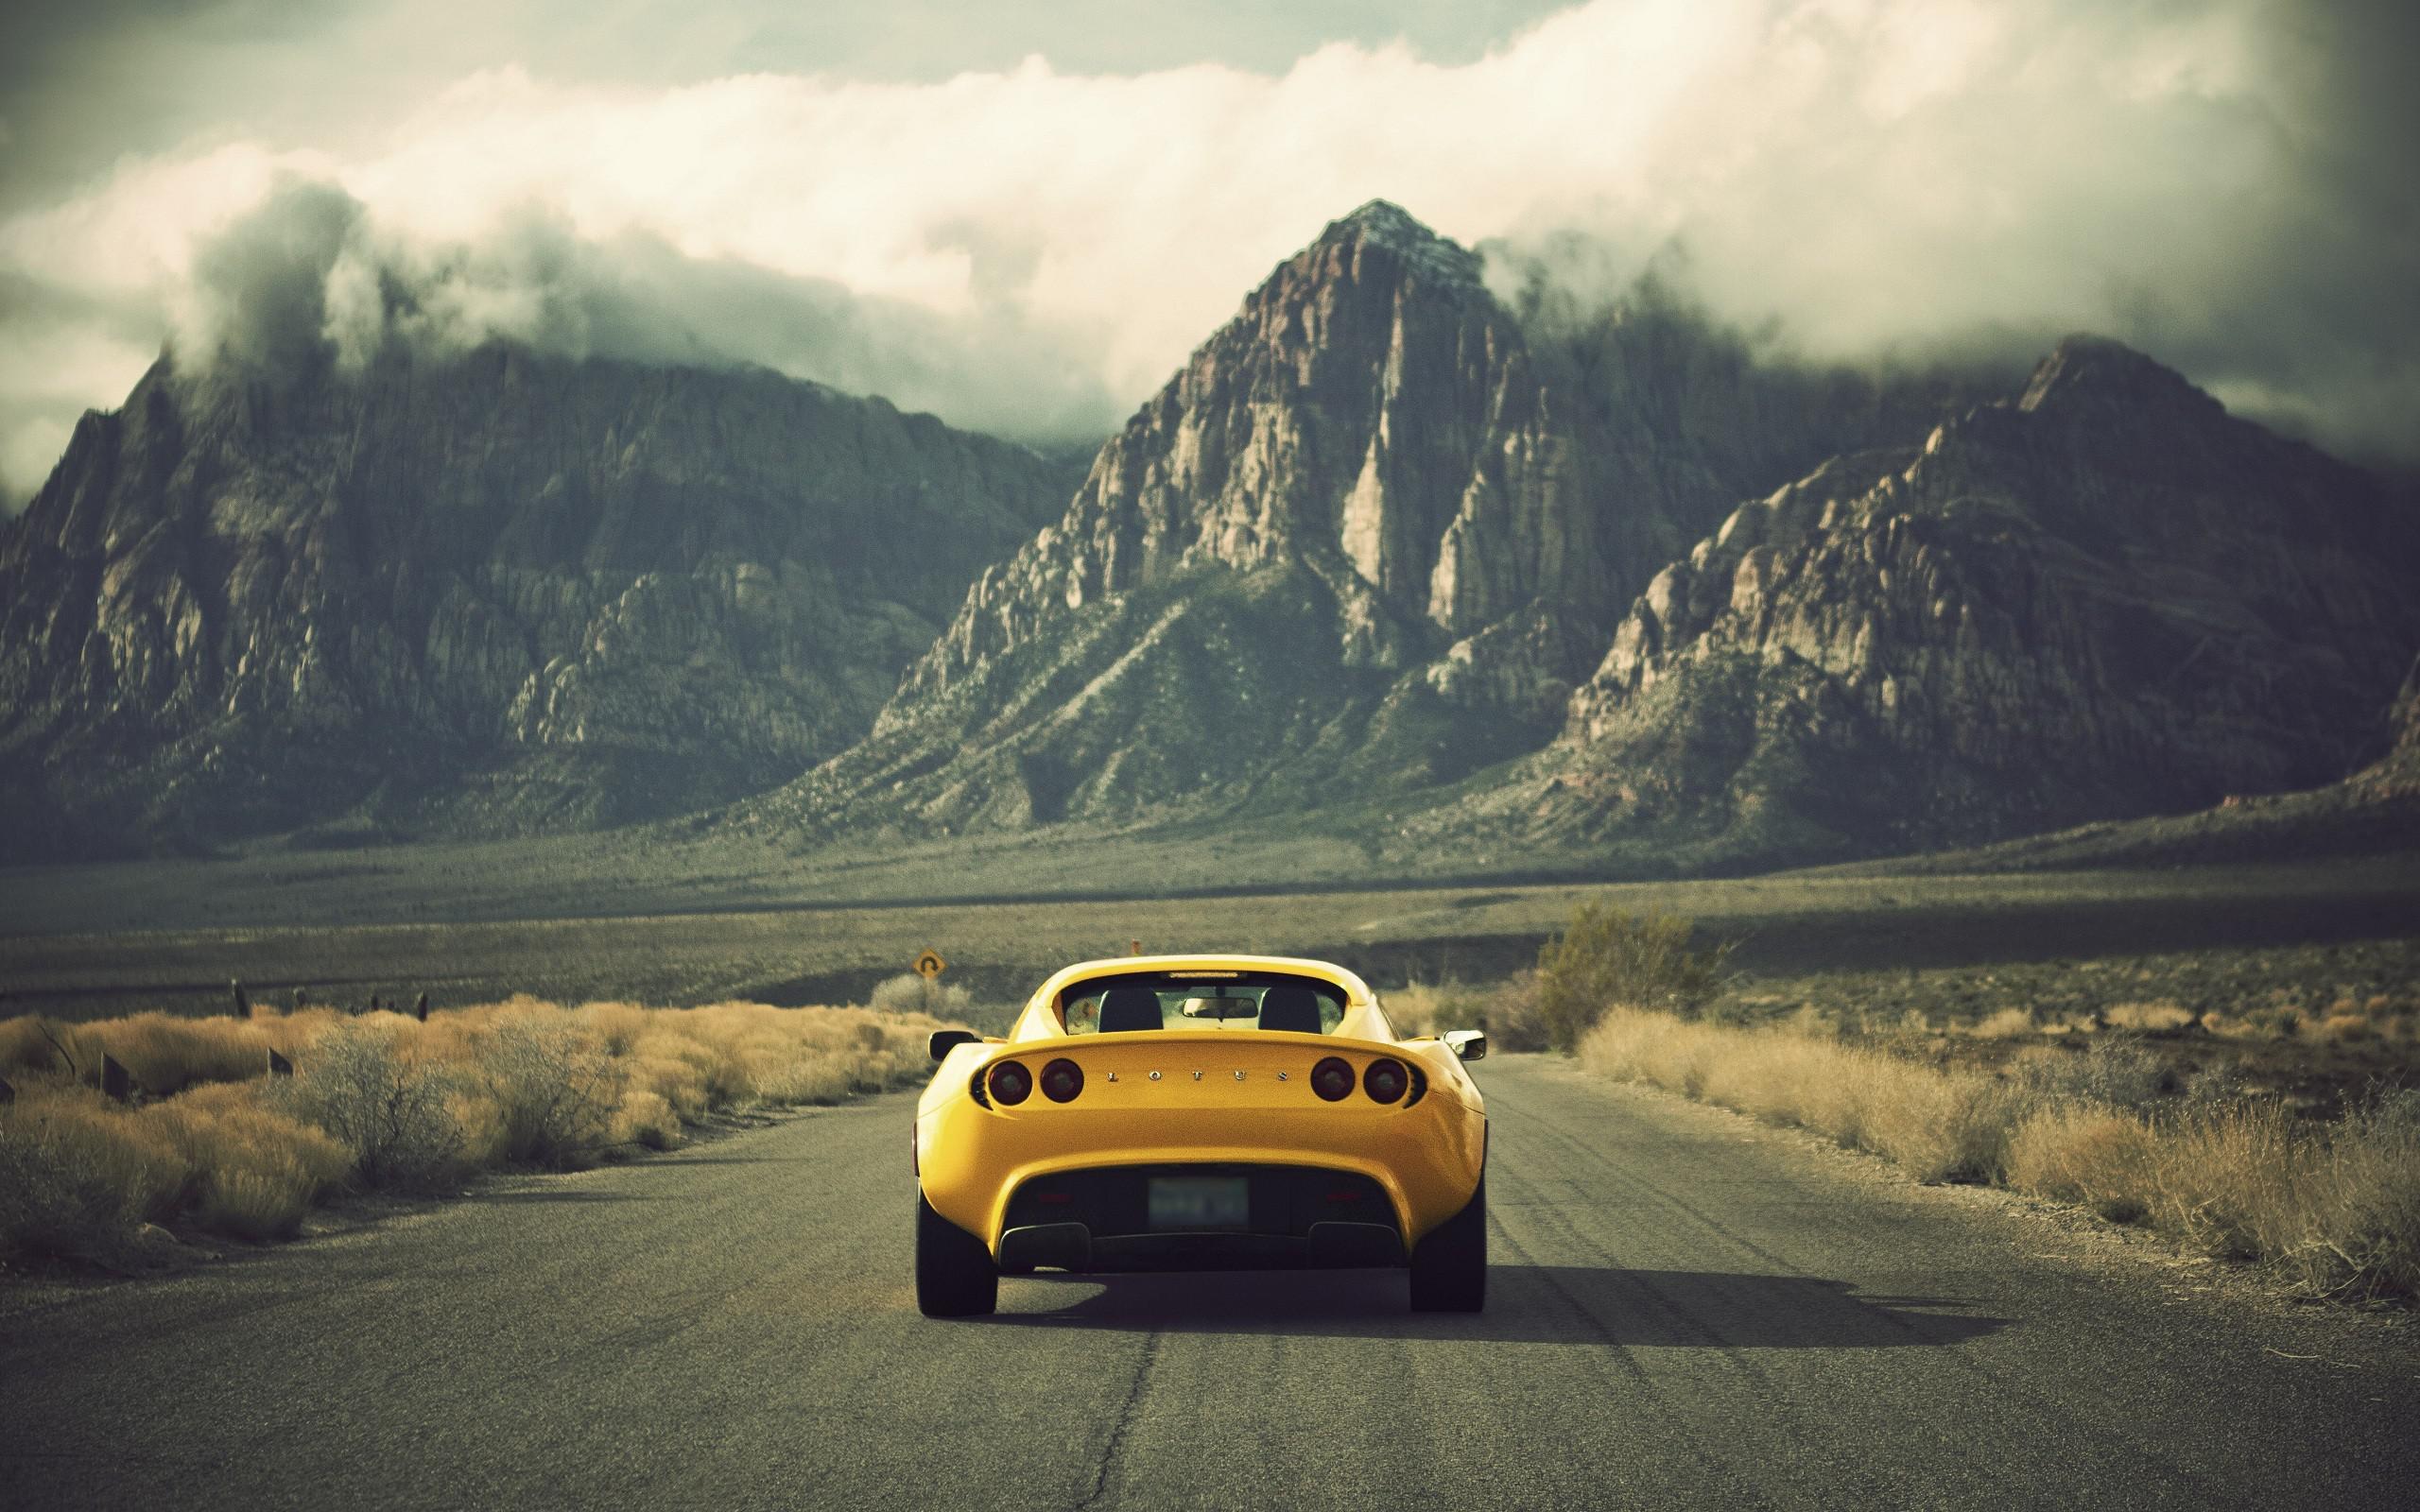 HD Yellow Lotus Car Free Background Wallpaper